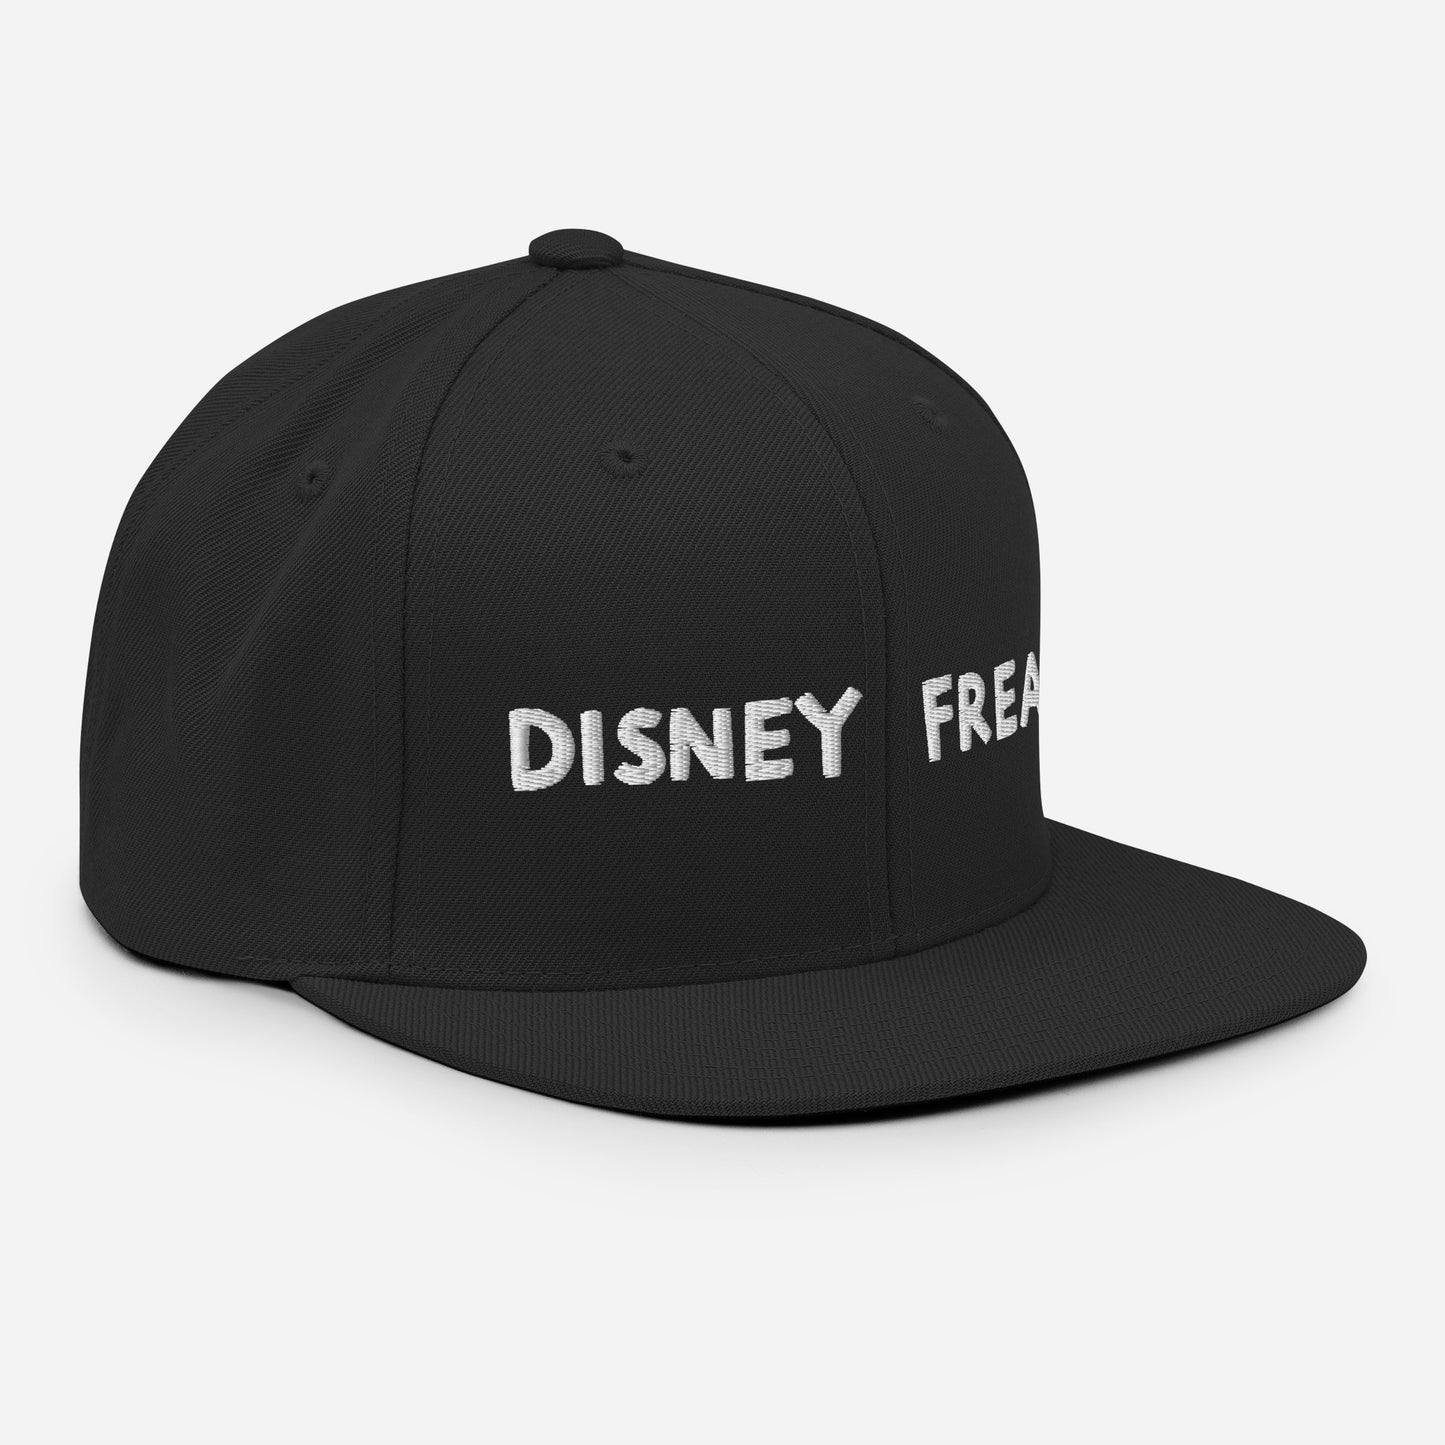 DISNEY FREAK - Snapback Hat